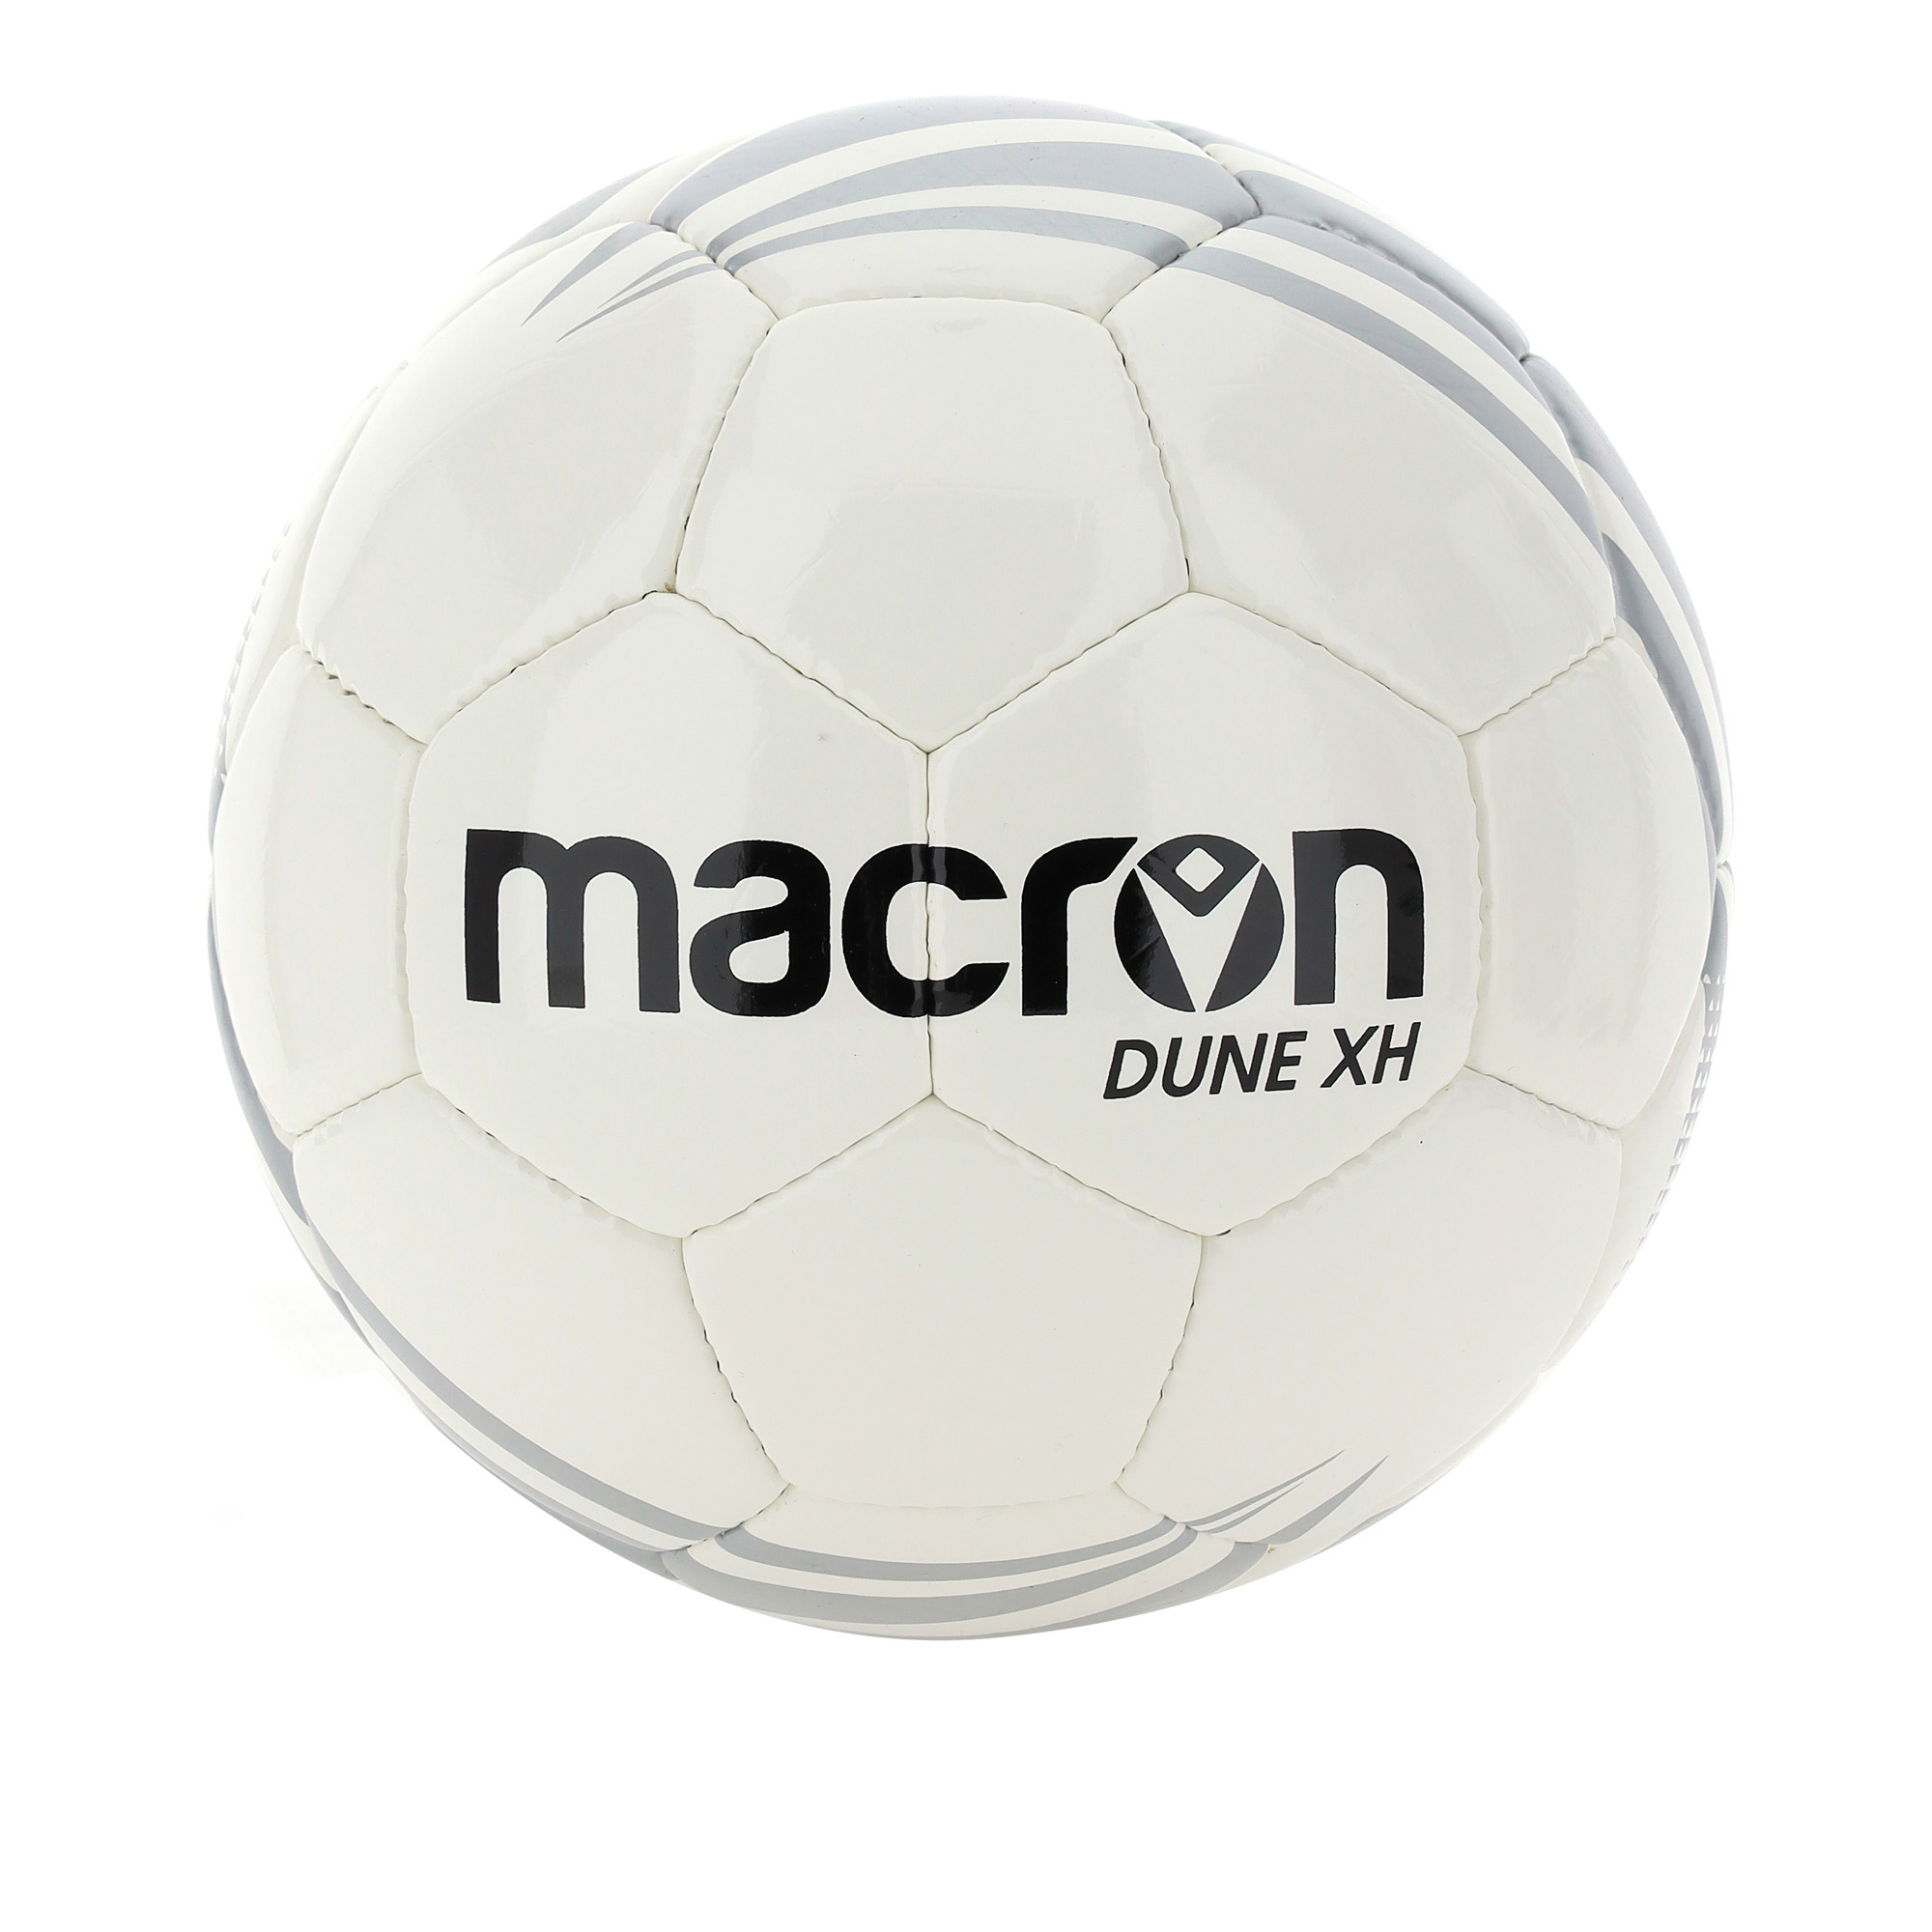 Macron Fussball Größe 4 Dune